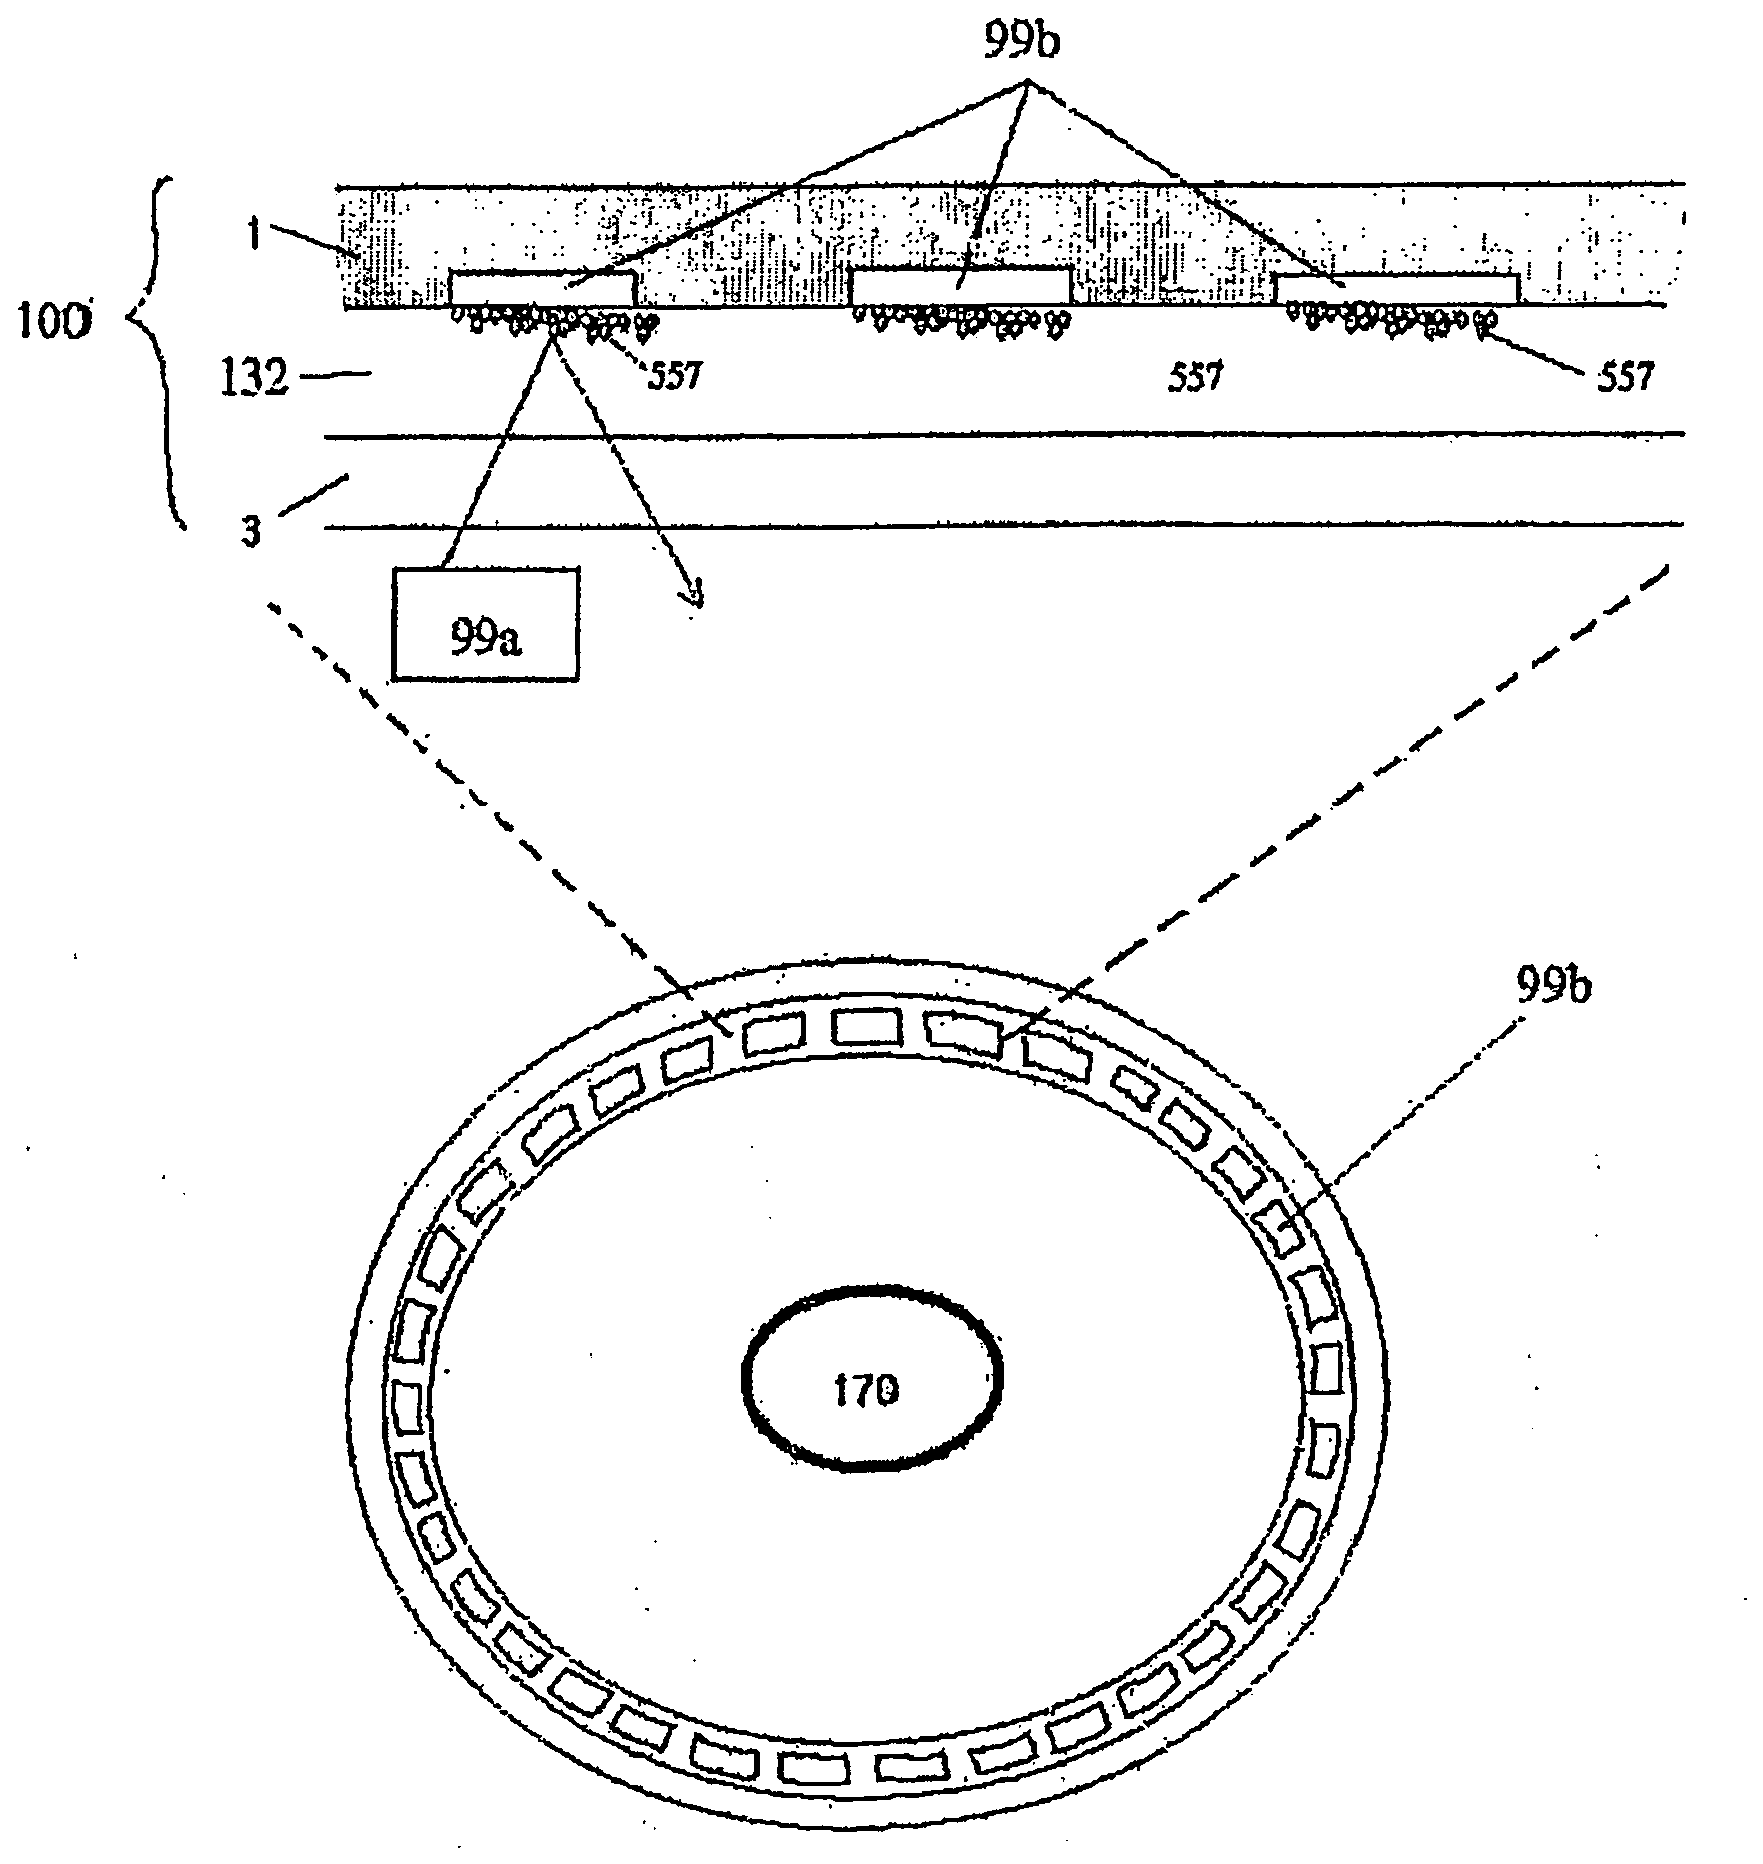 Bio disc, bio-driver apparatus, and assay method using the same